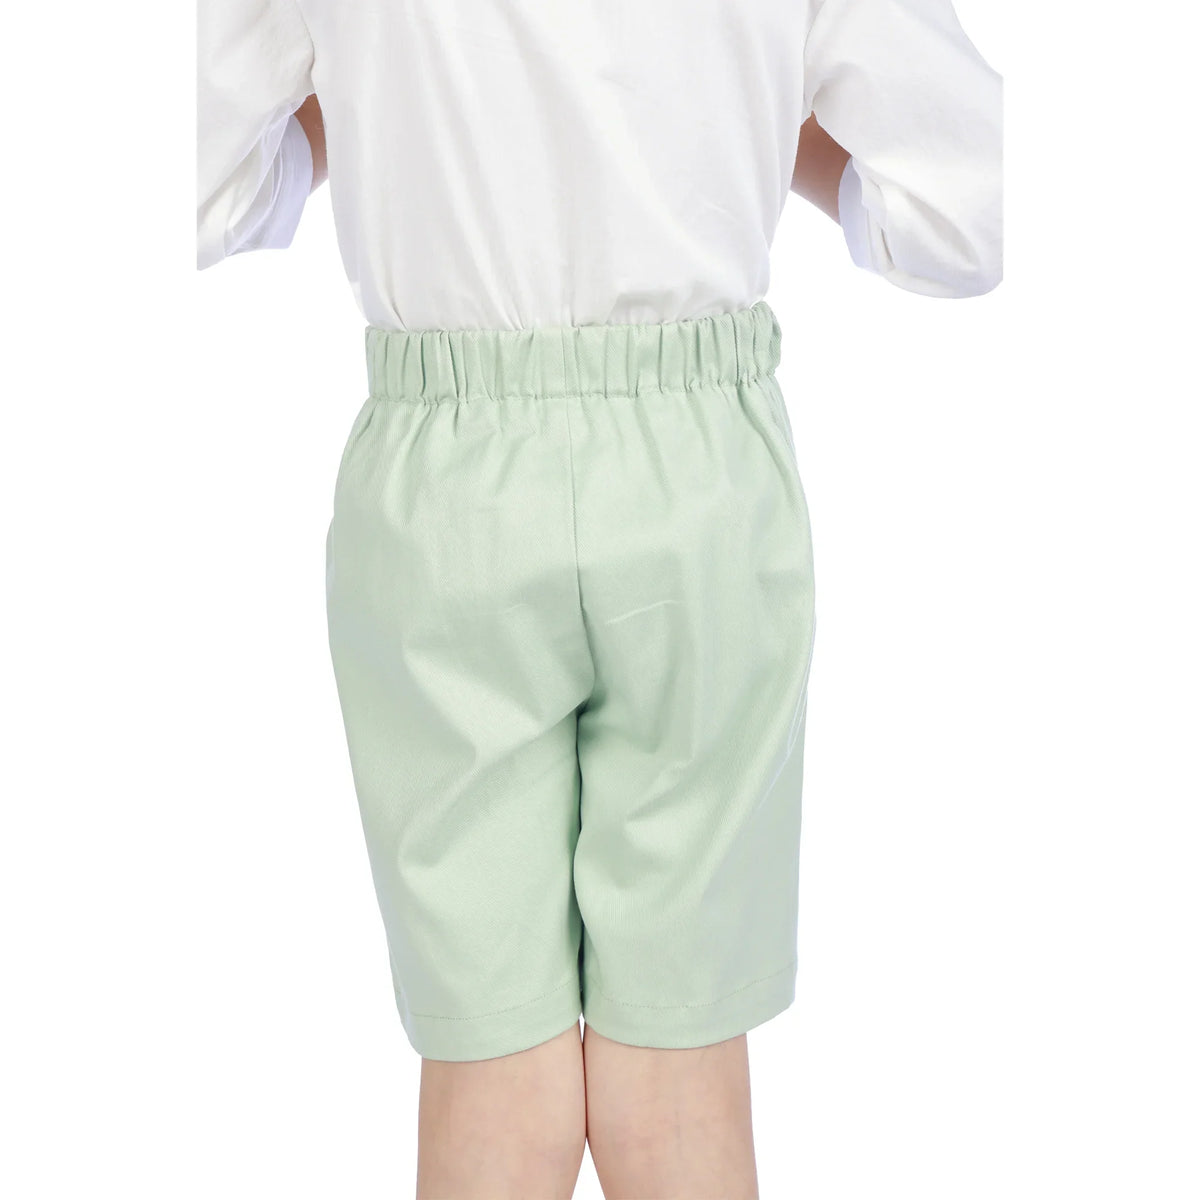 Ordinary Formal Shorts For Boys